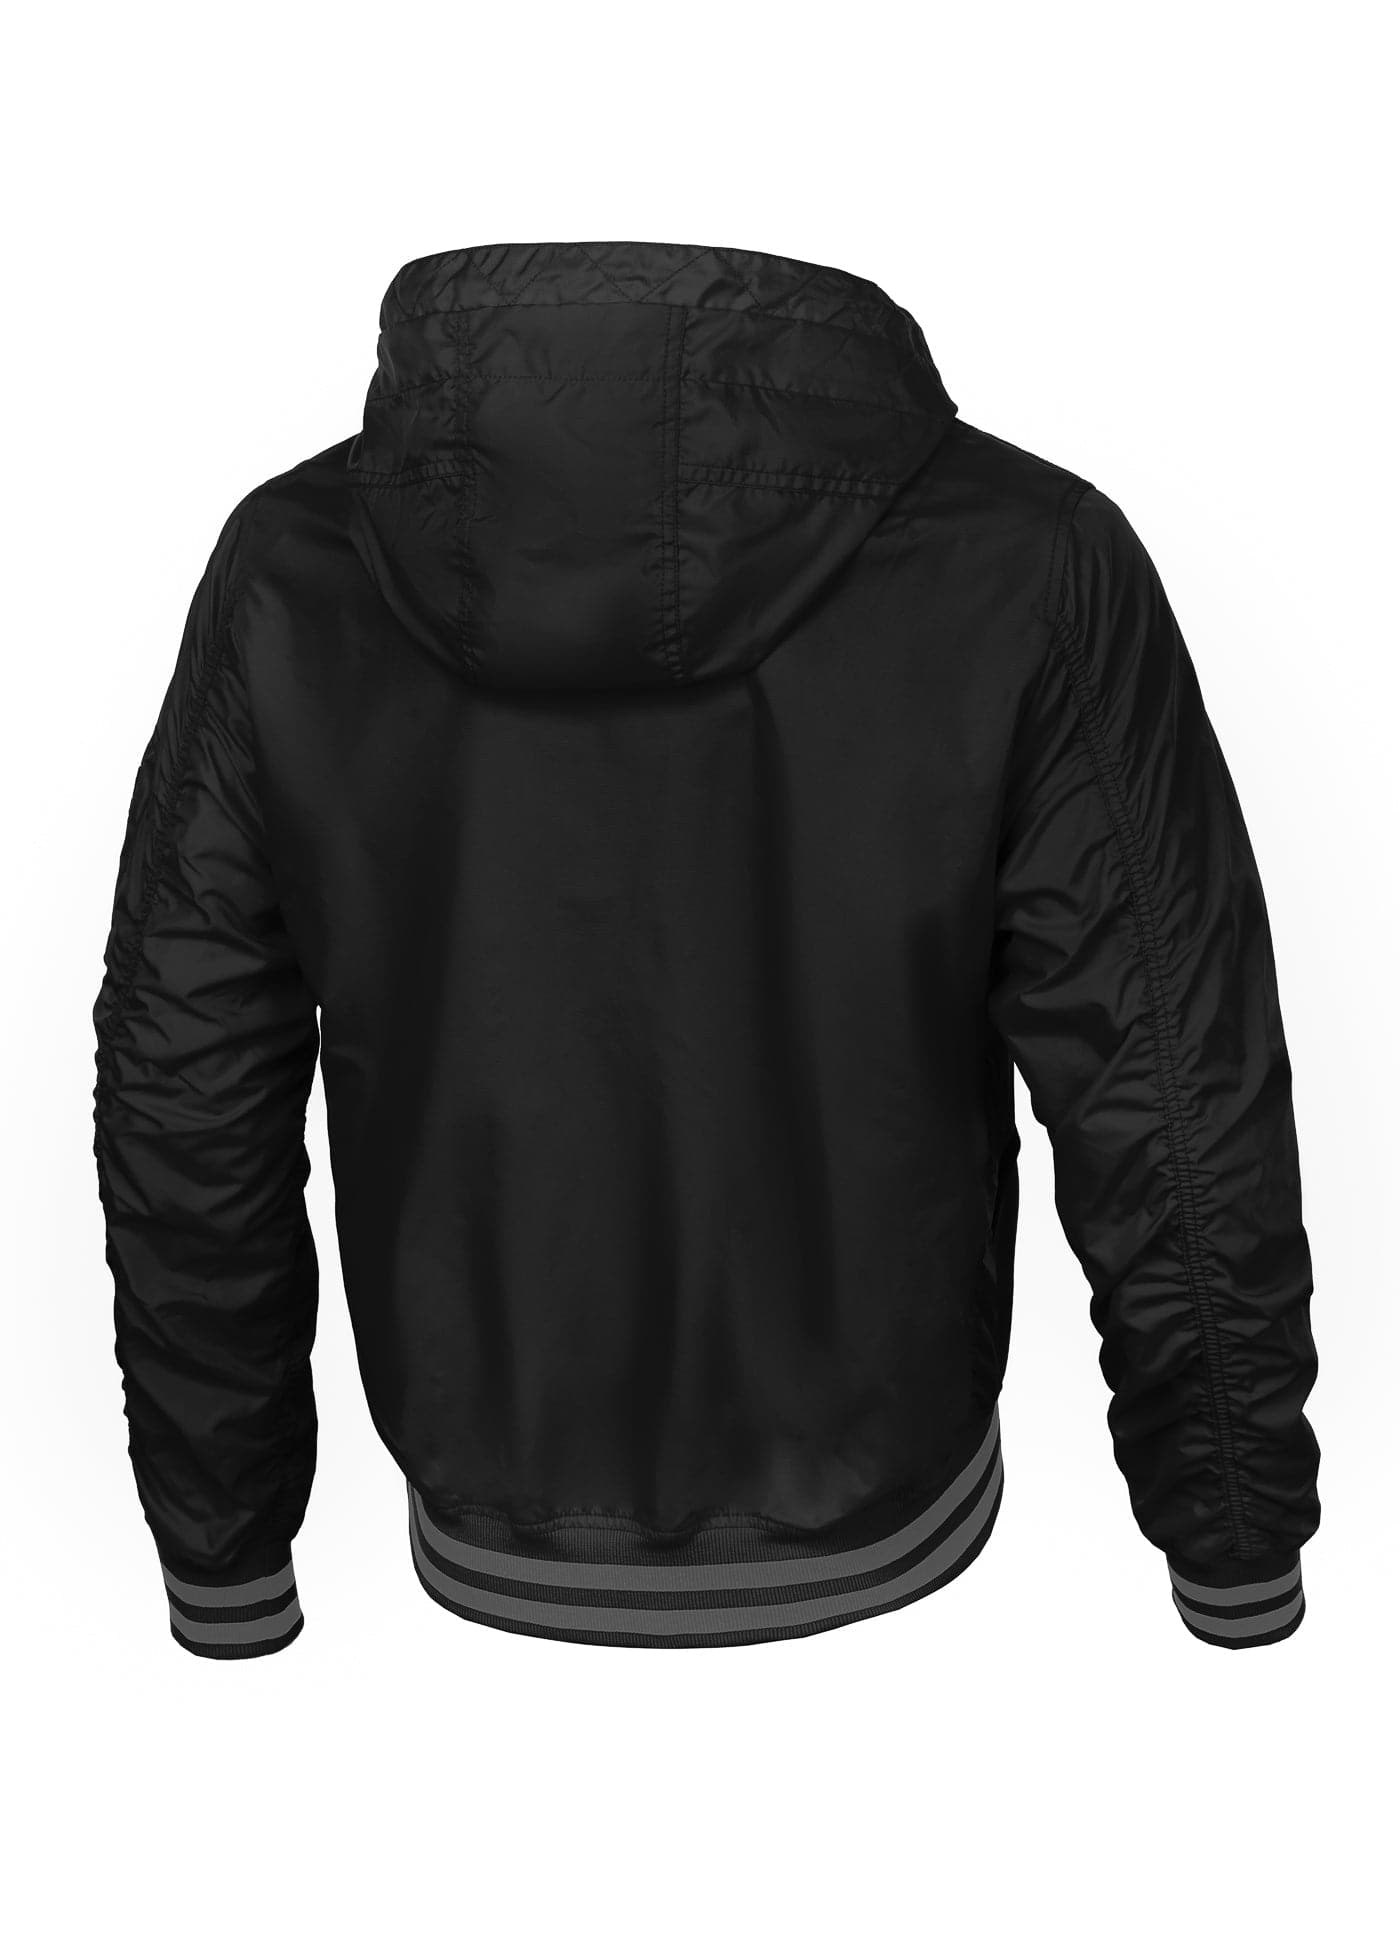 Buy OVERPARK Black Jacket | Pitbull Store | 